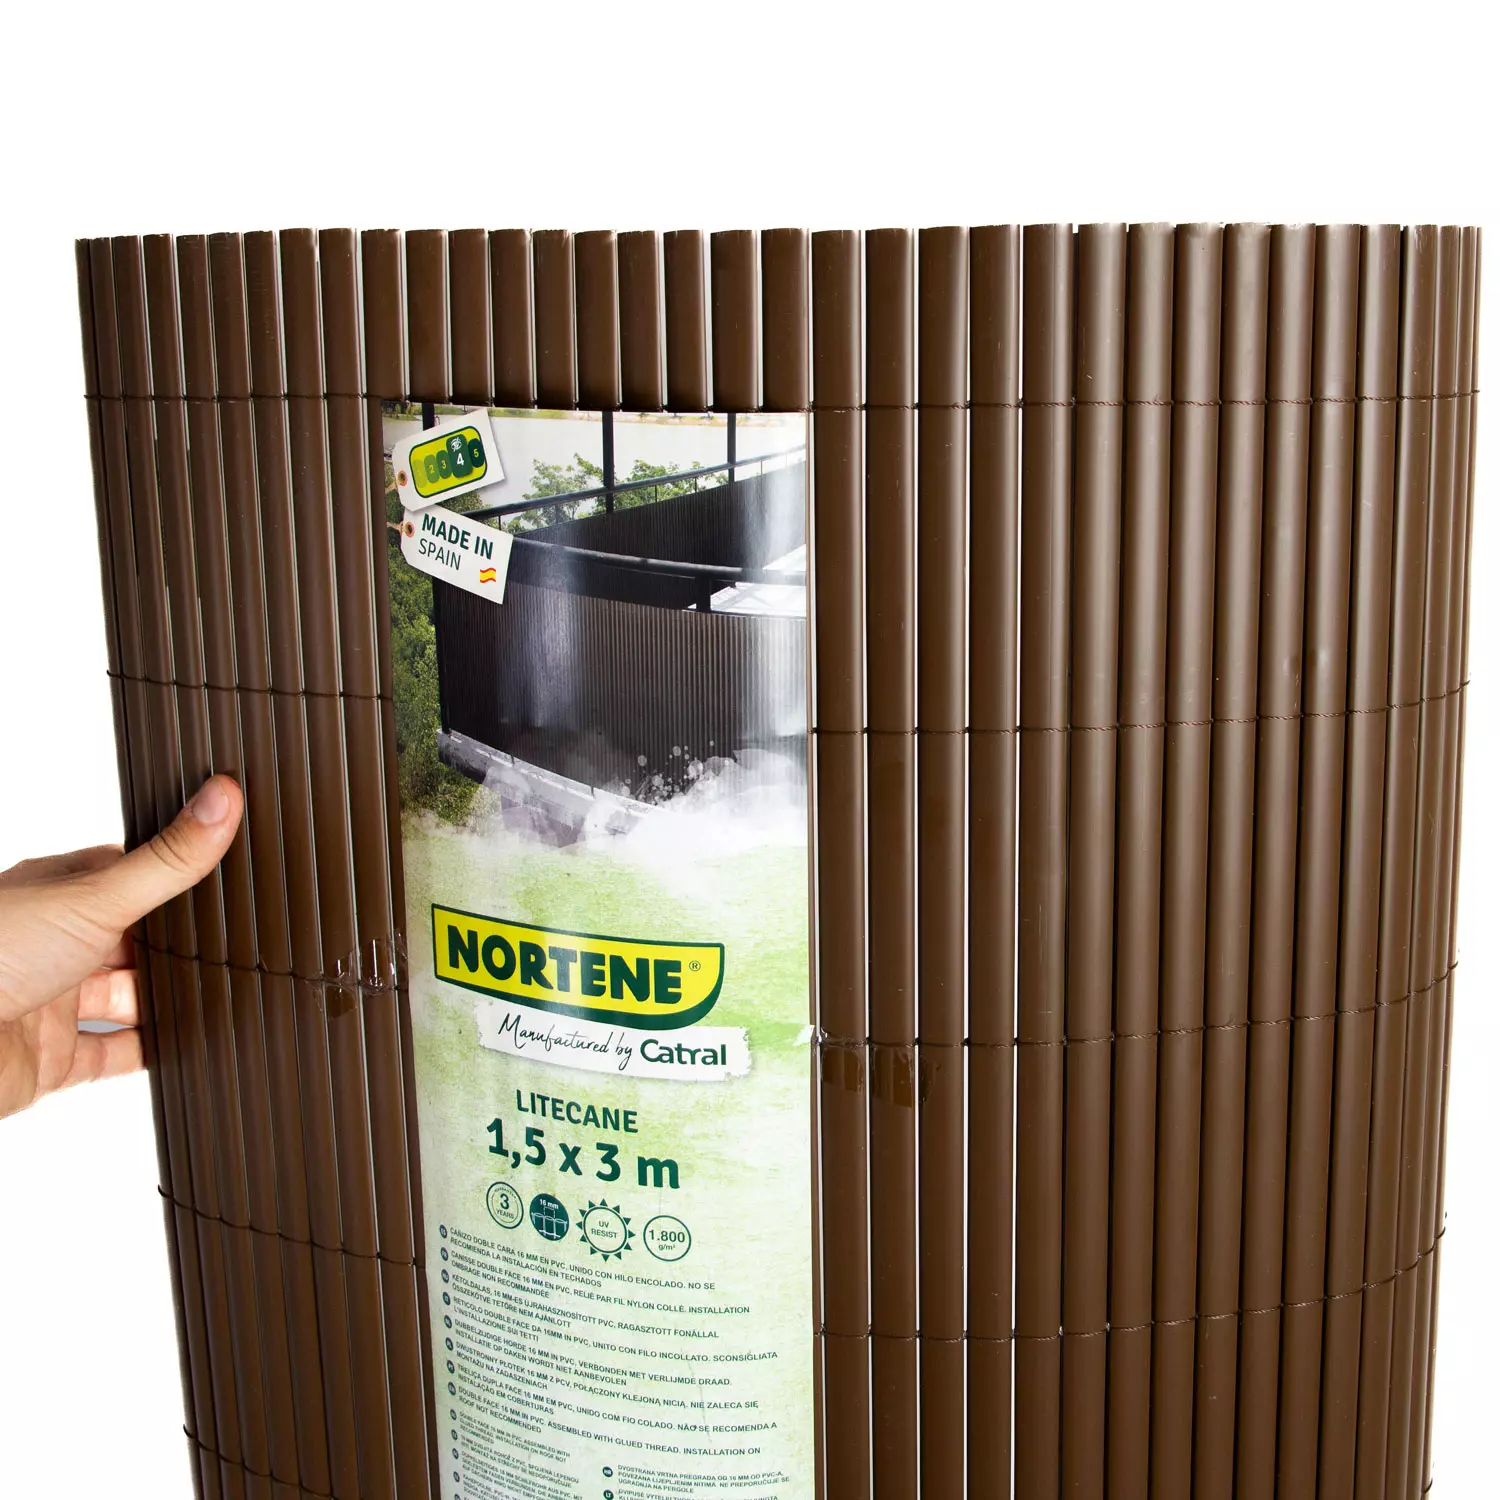 Nortene-Catral Litecane ovális profilú műanyag nád, 2x3m, barna